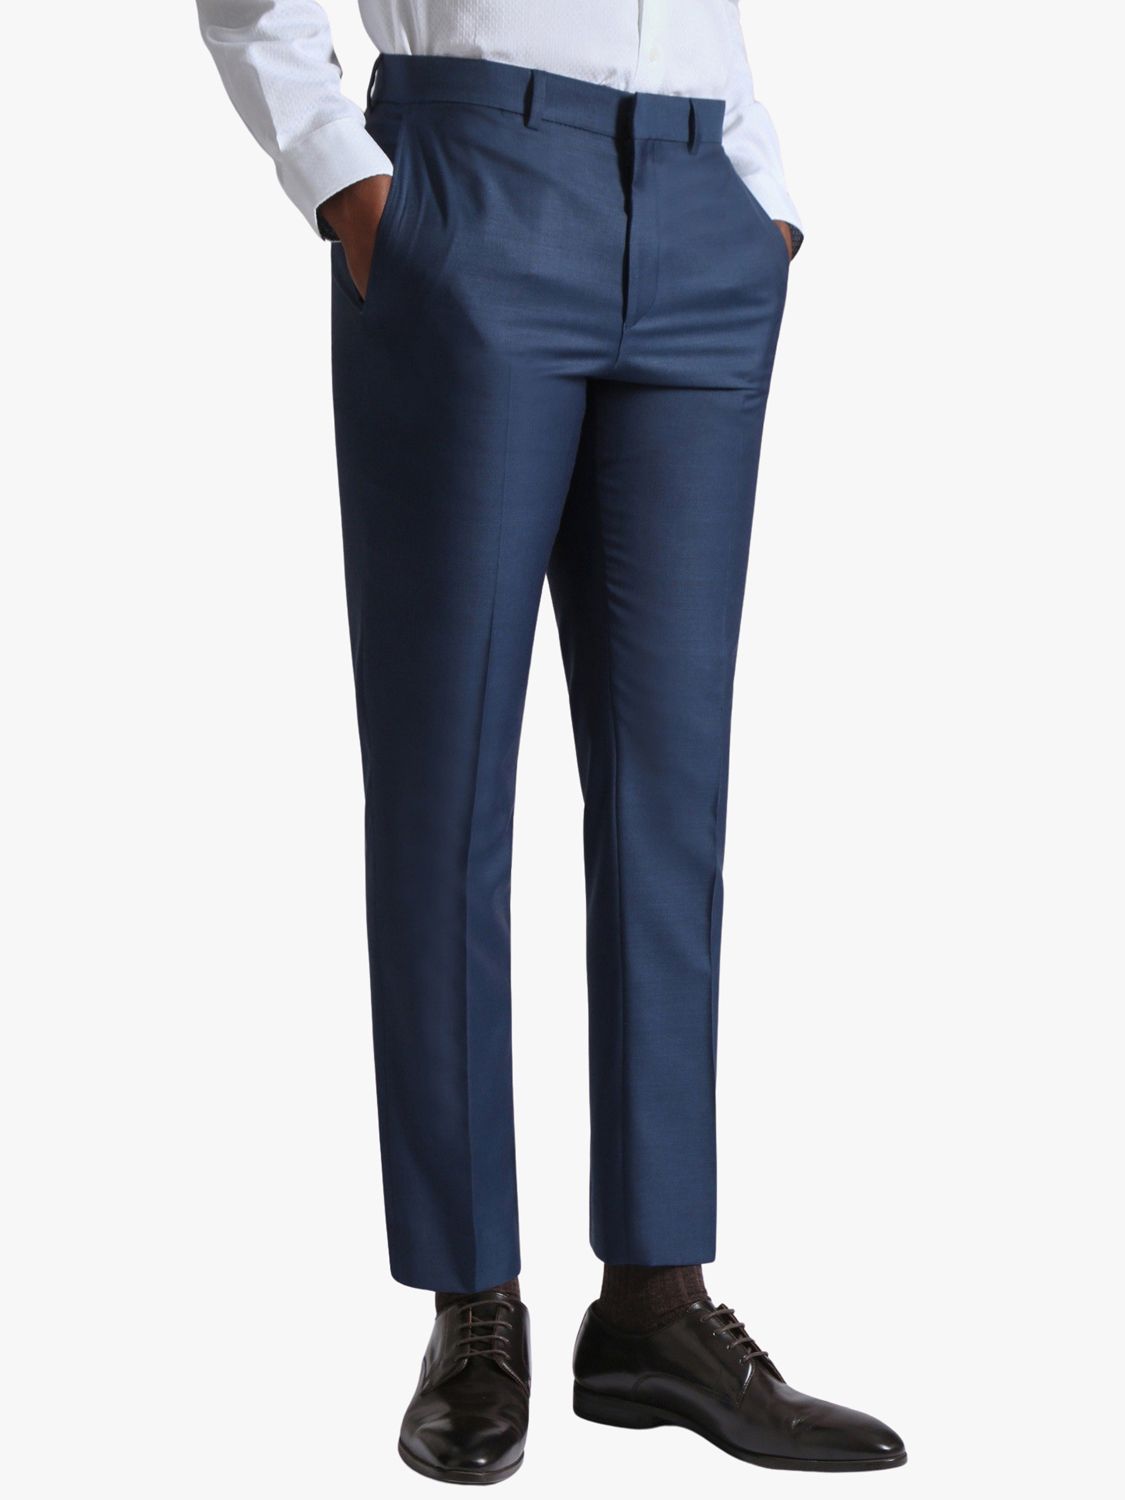 Ted Baker Tai Slim Fit Wool Blend Suit Trousers, Teal, 40R